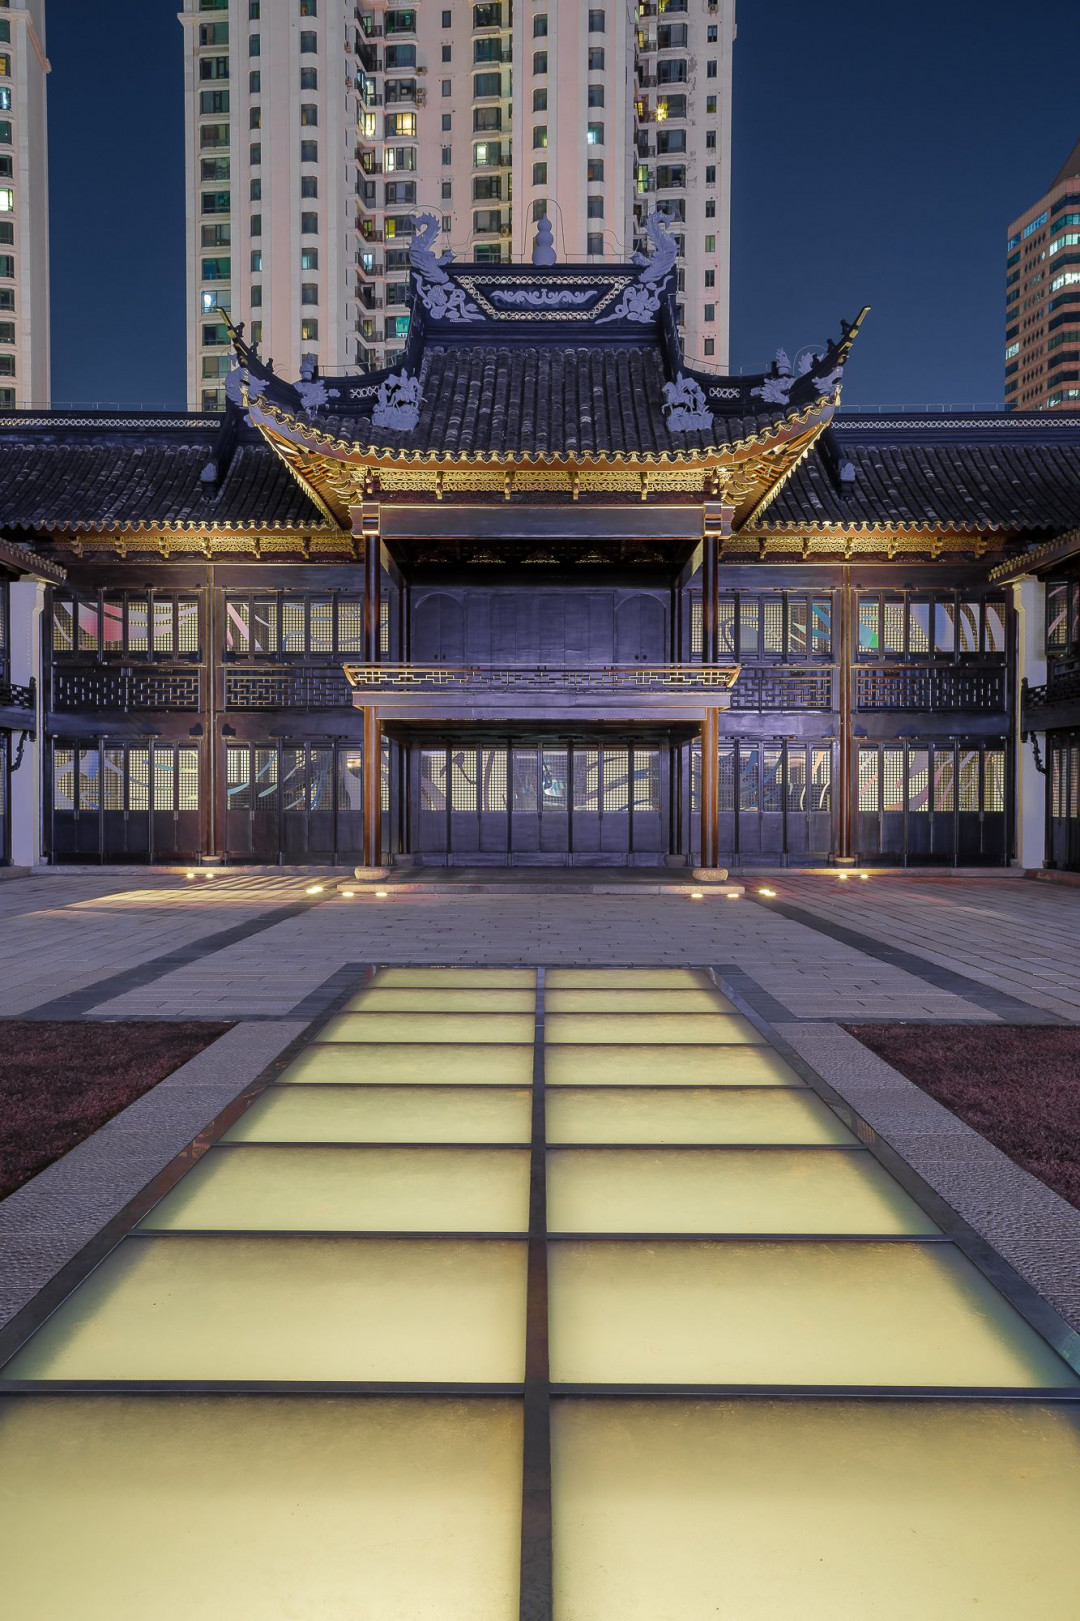 Shanghai Suhe MixC World | Kokaistudios' New Urban Green Land Blends heritage, culture and retail